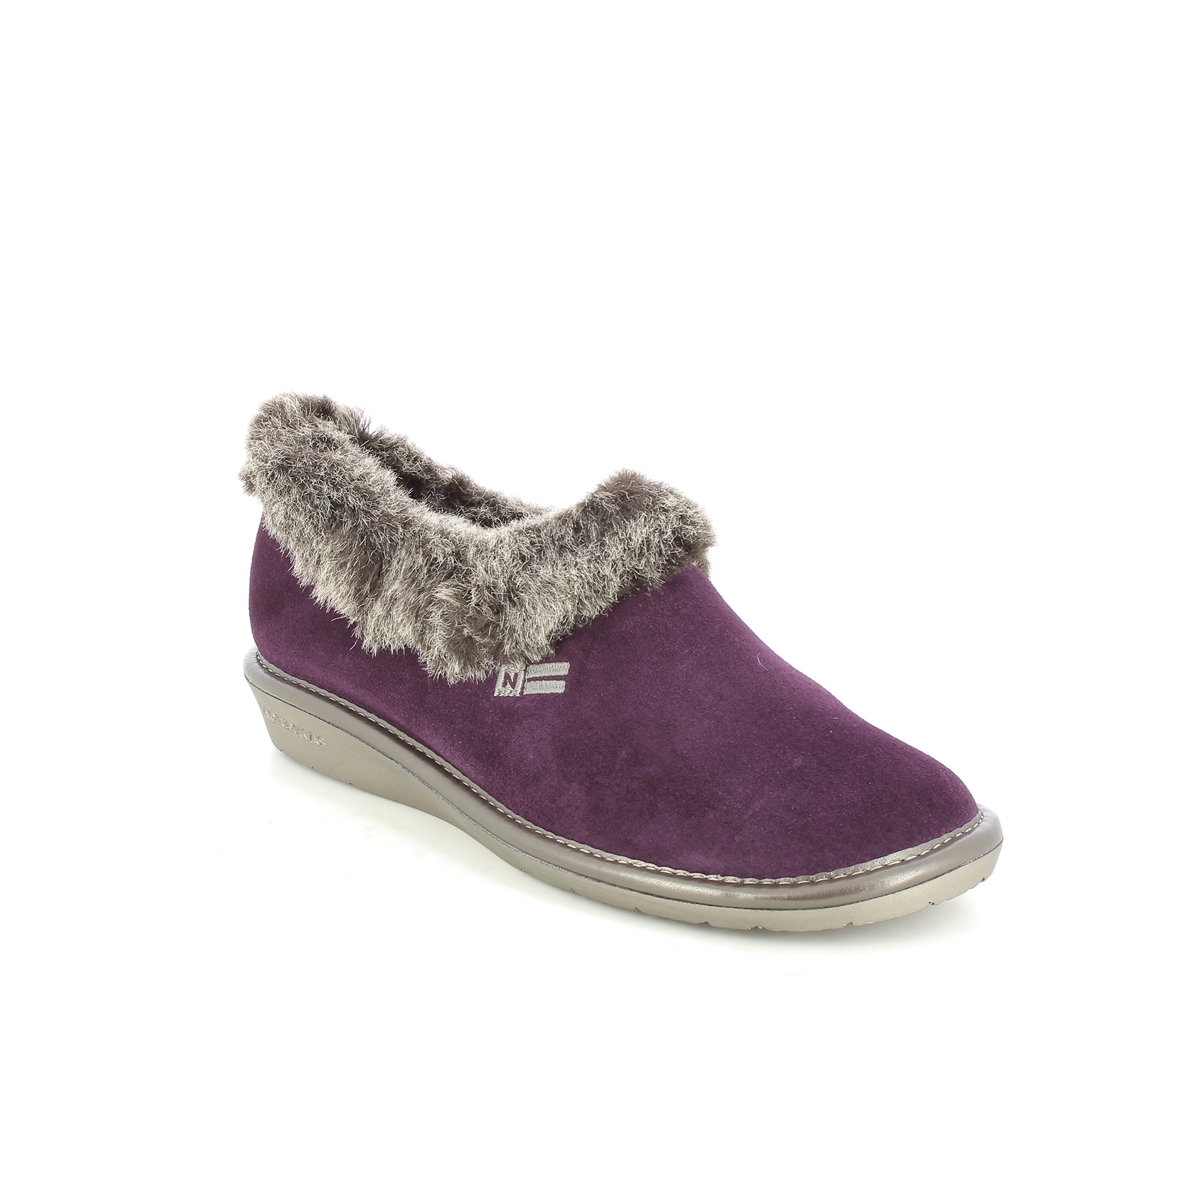 Nordikas Toasty Fur Purple Suede Womens Slippers 1358-95 In Size 42 In Plain Purple Suede